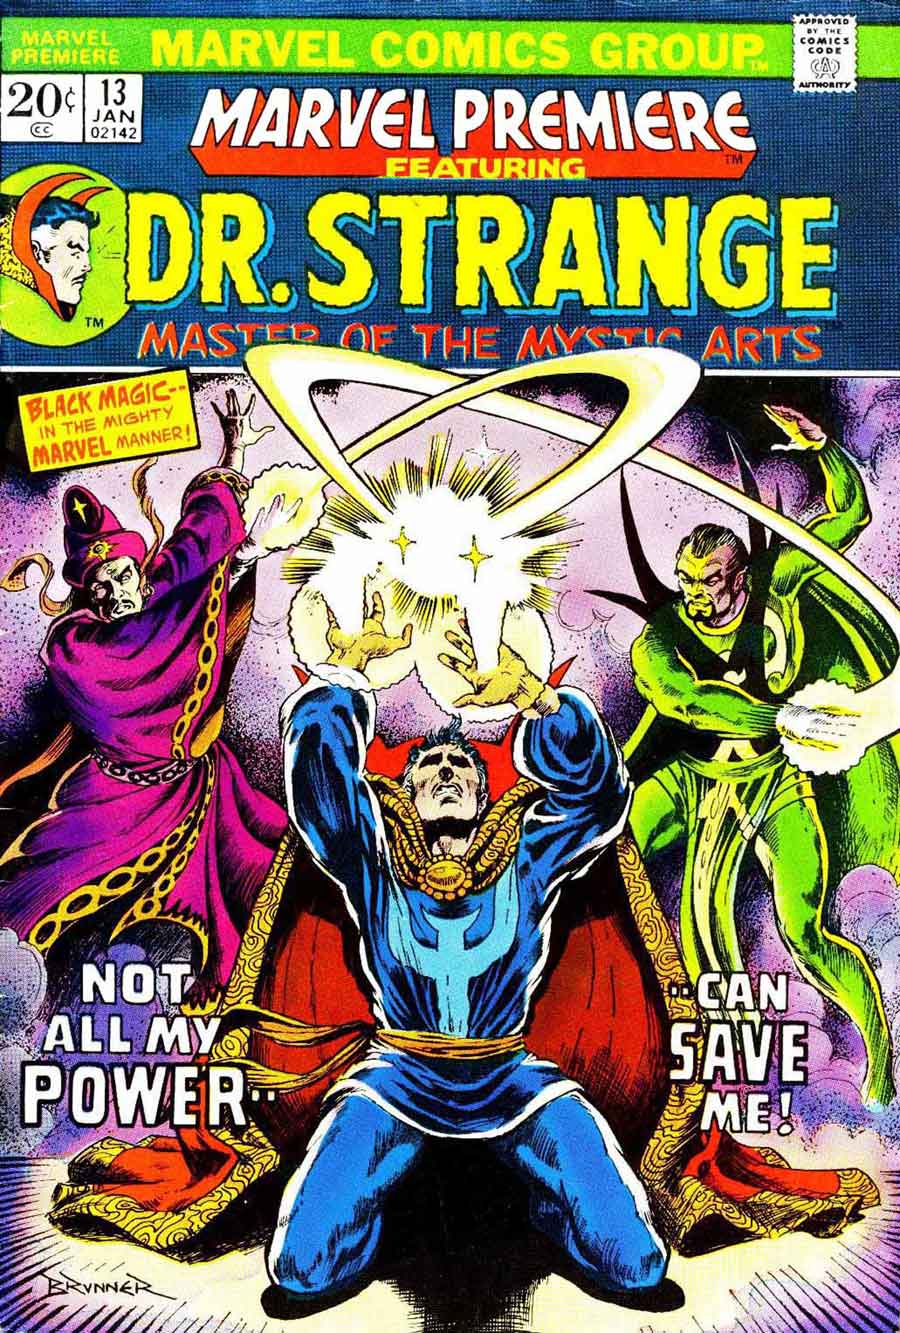 Marvel Premiere #13 / Doctor Strange marvel comic book cover by Frank Brunner